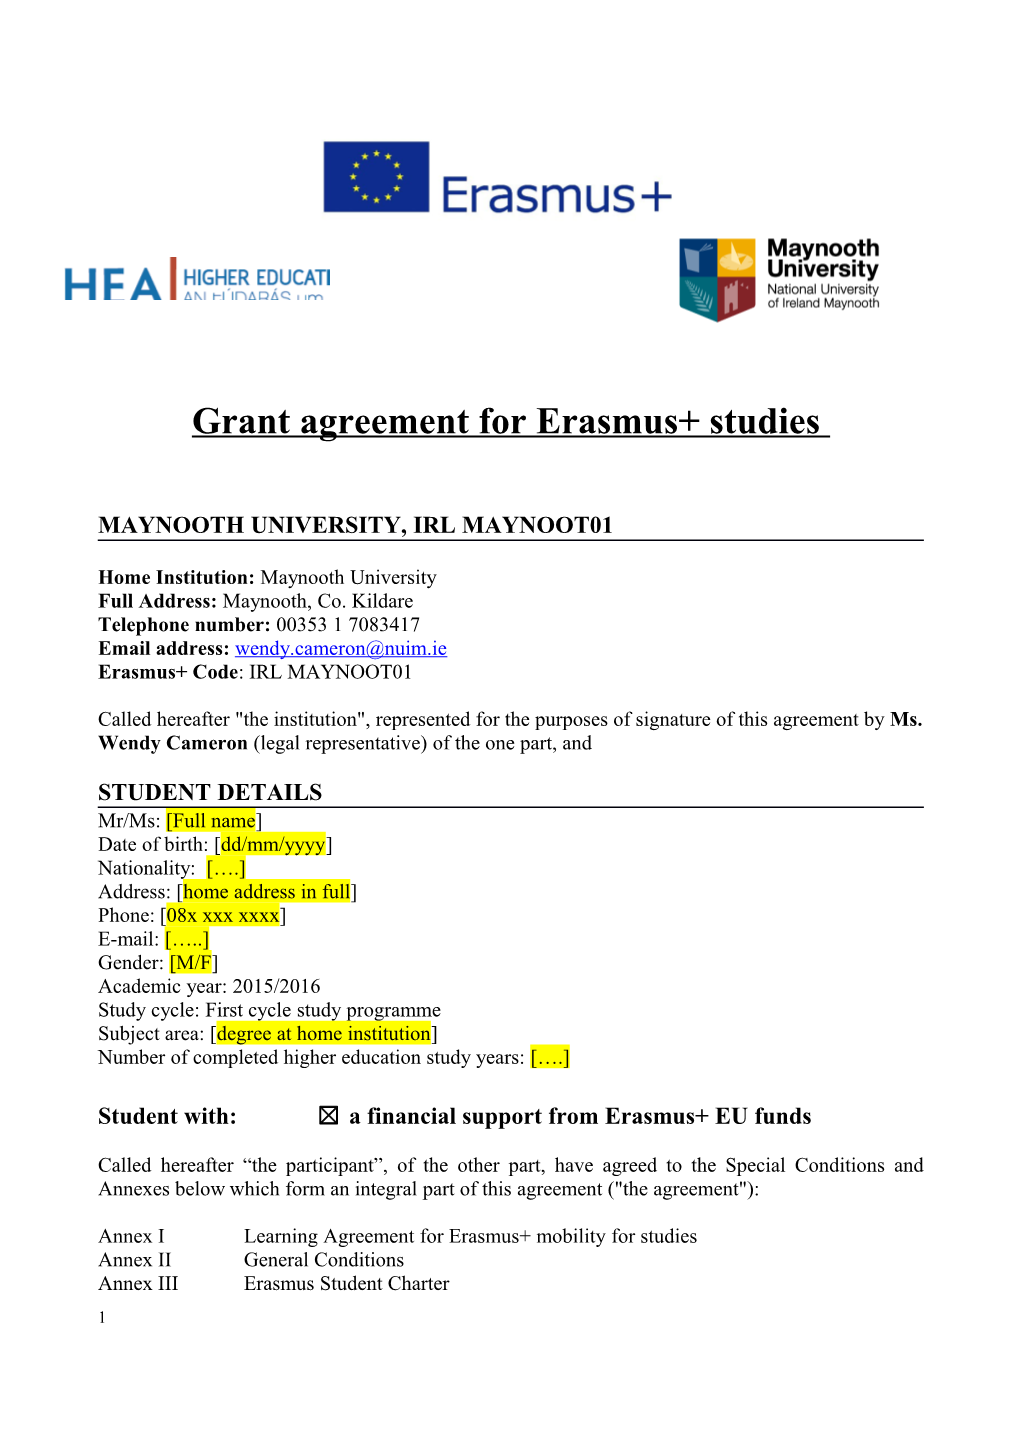 Grant Agreement for Erasmus+ Studies